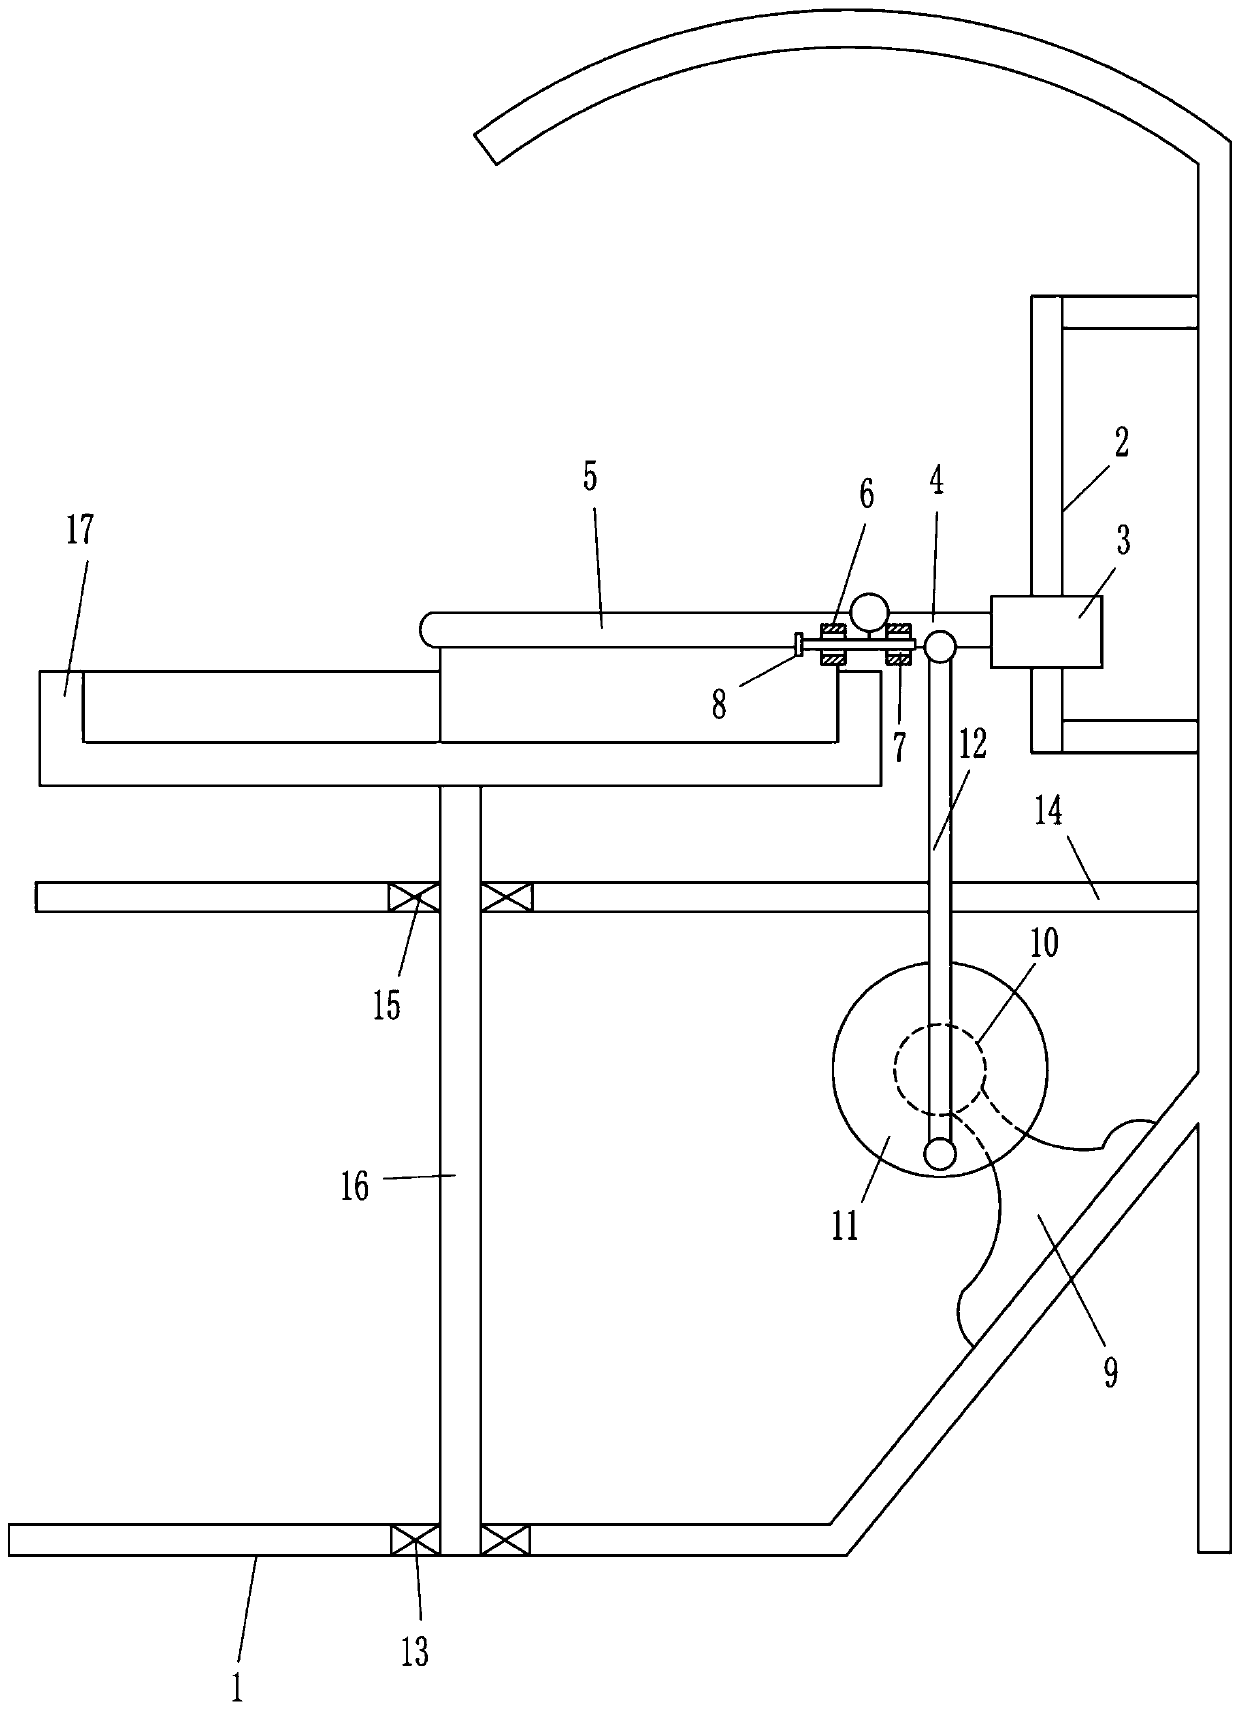 An intelligent household rotary chili cutting equipment